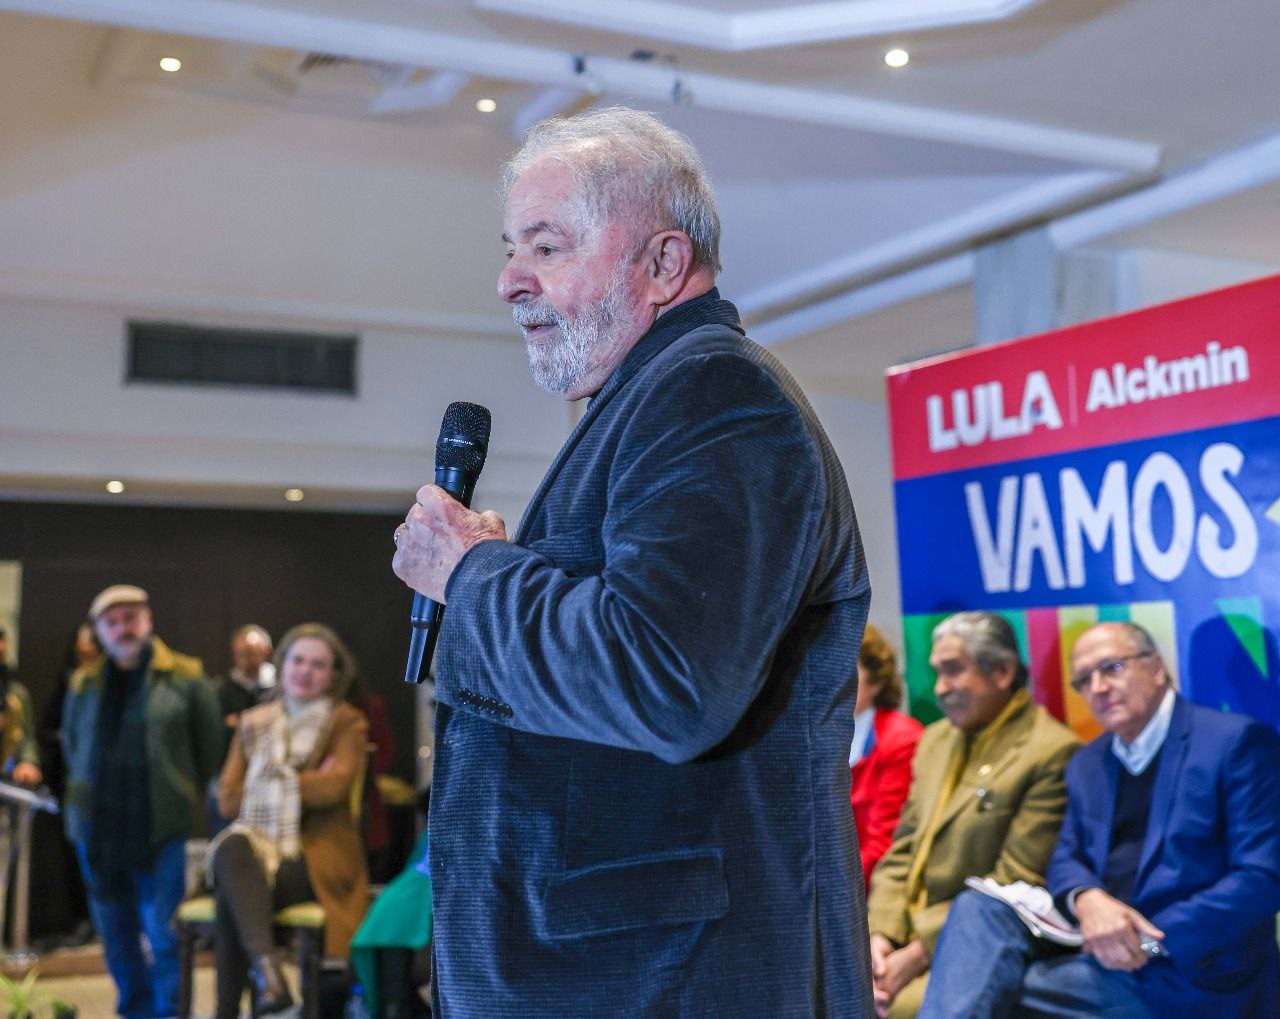 Durante palestra ex-presidente Lula disse “fiz milagres para o povo pobre”